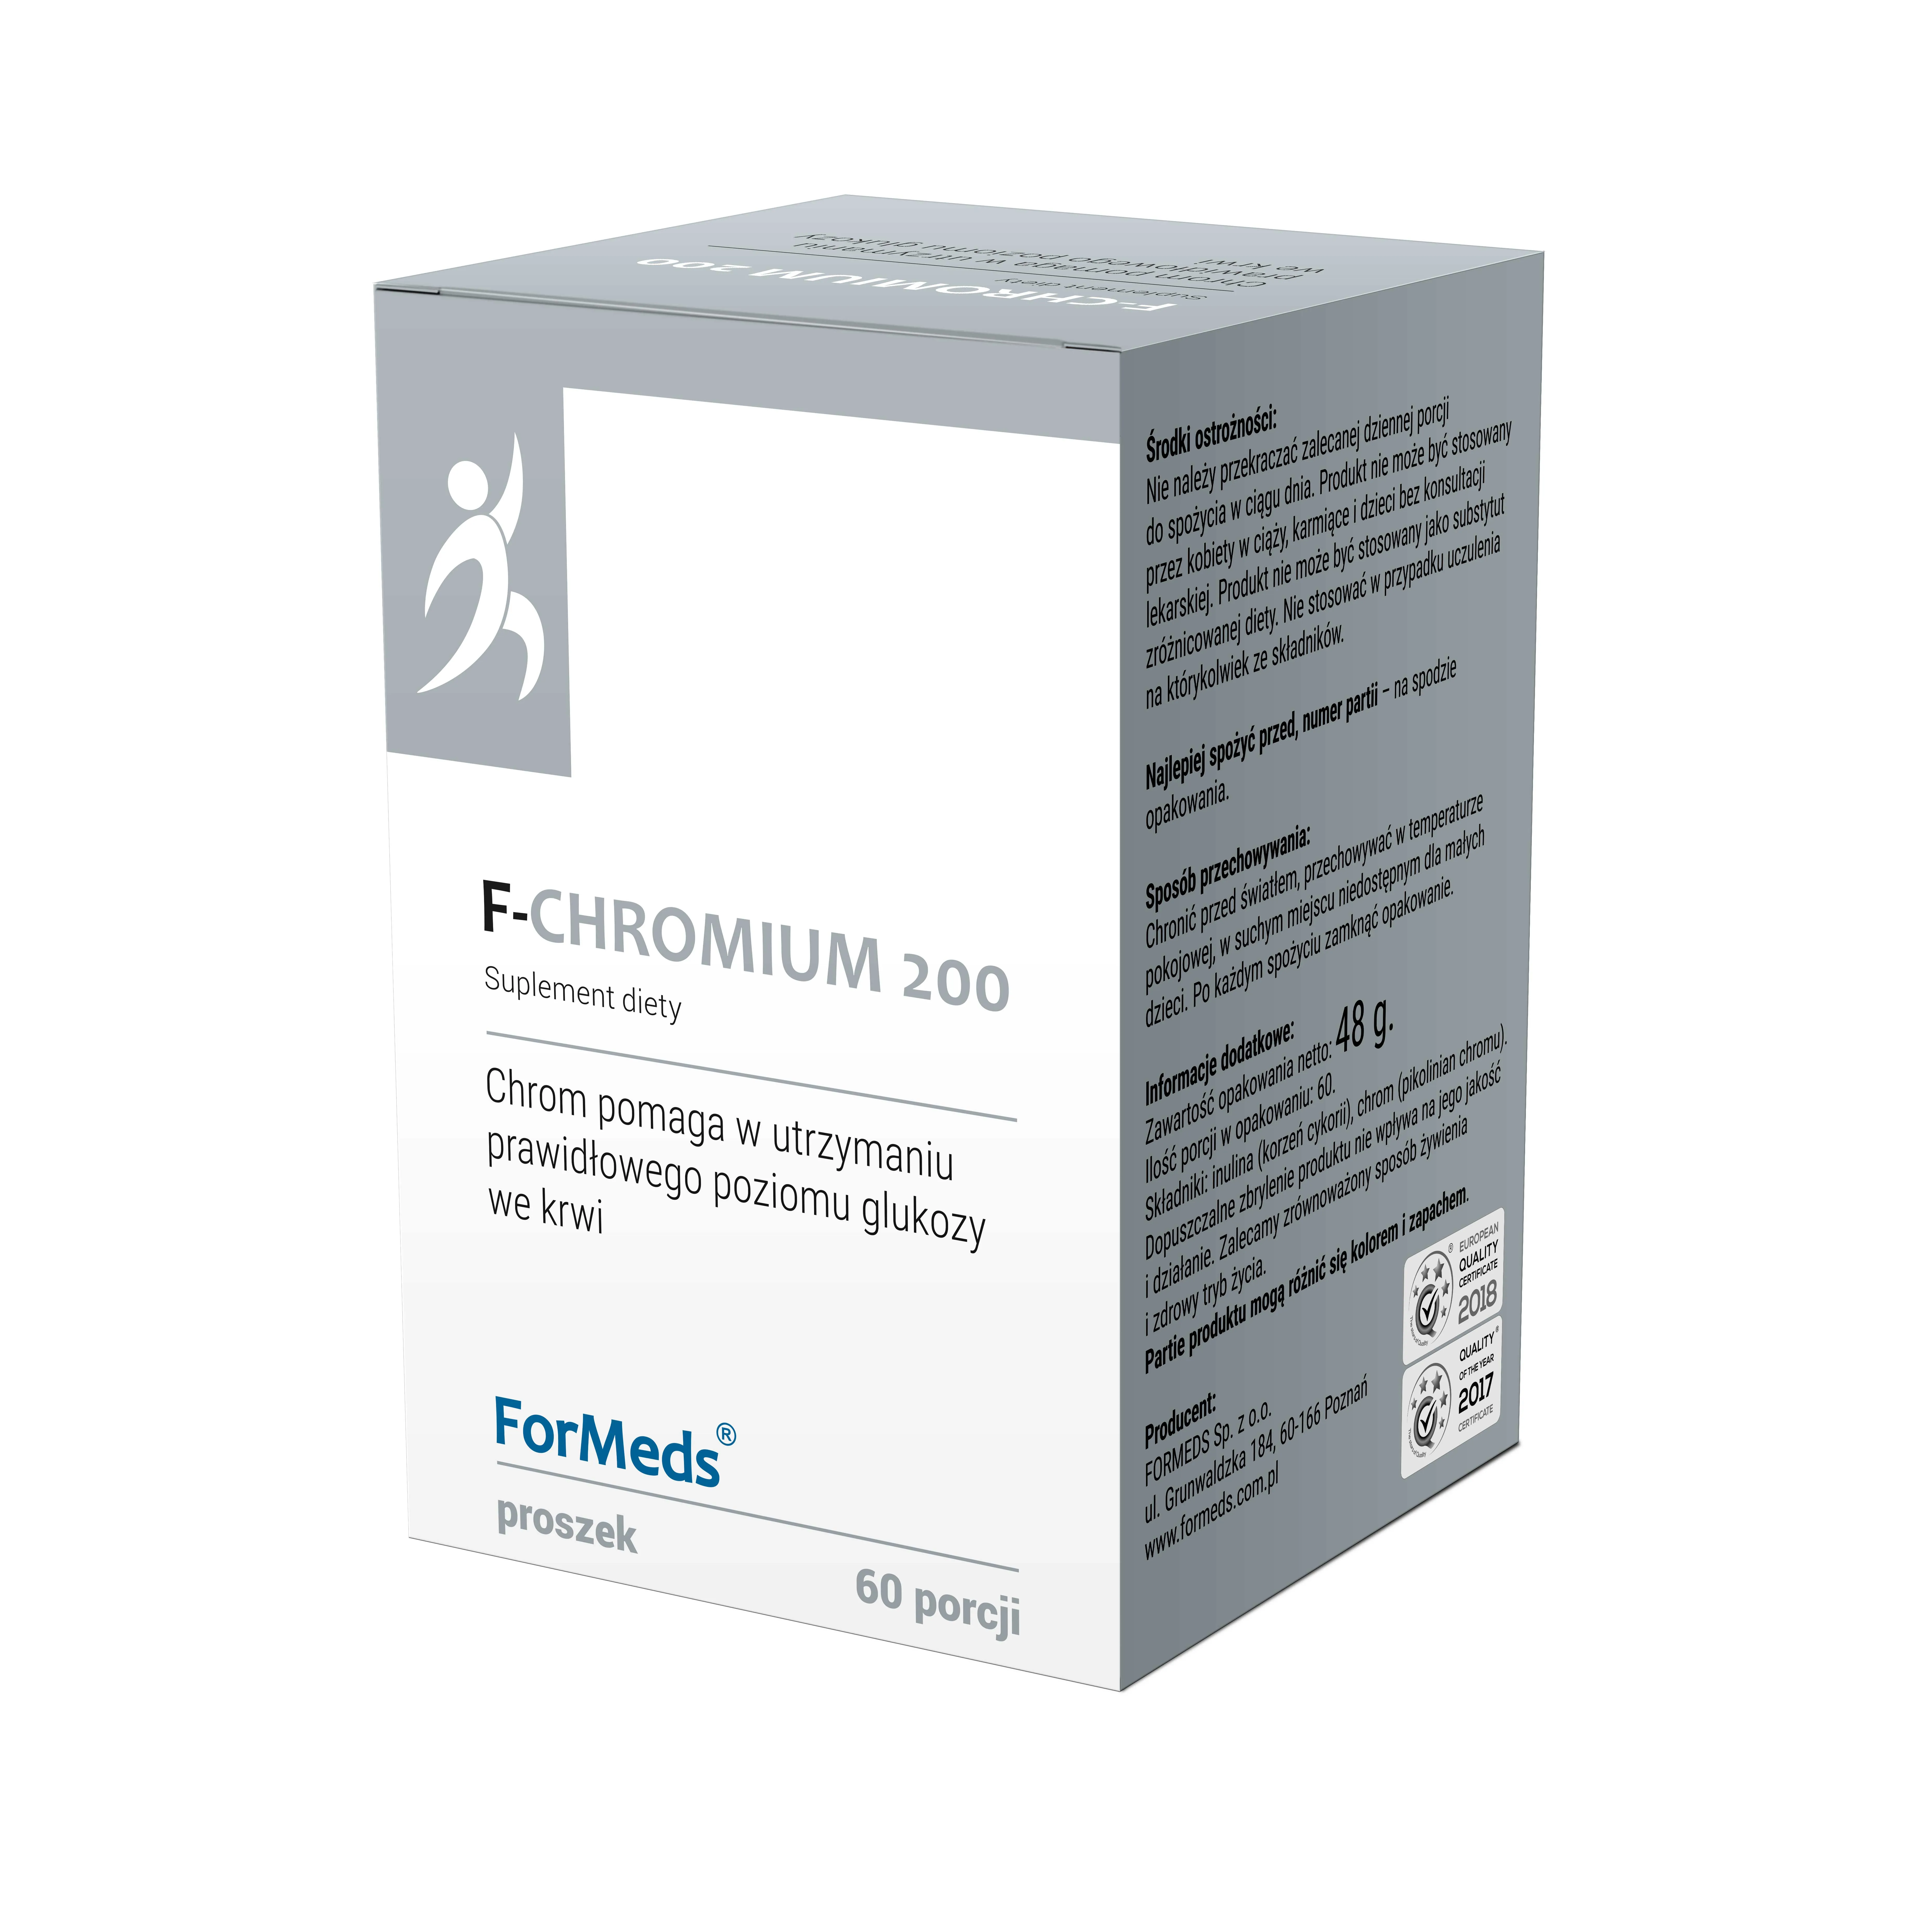 ForMeds F-Chromium 200, suplement diety, proszek, 60 porcji